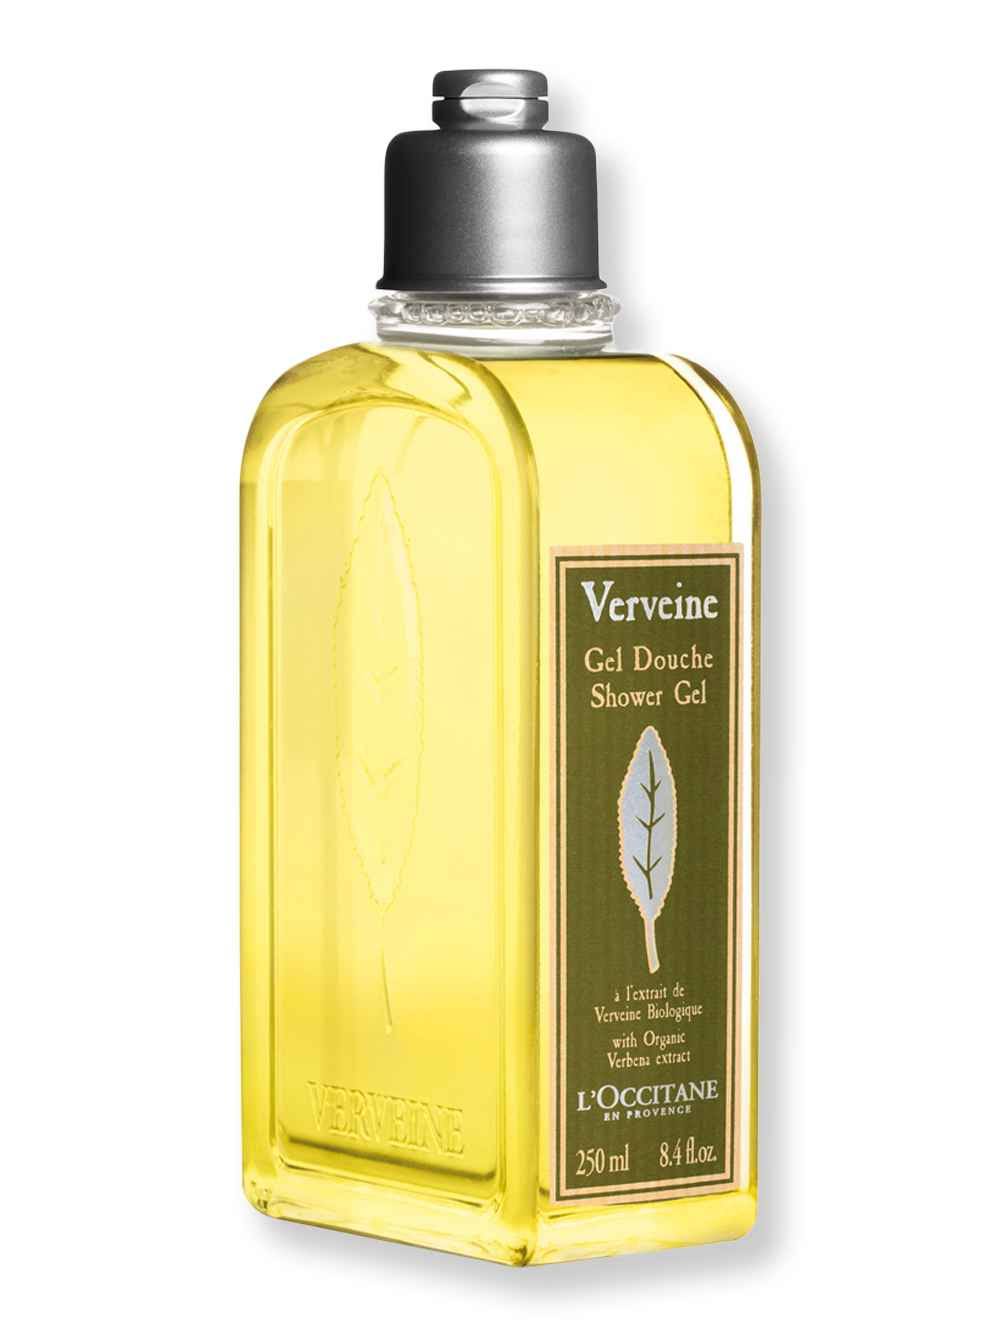 L'Occitane Verbena Shower Gel 8.4 oz